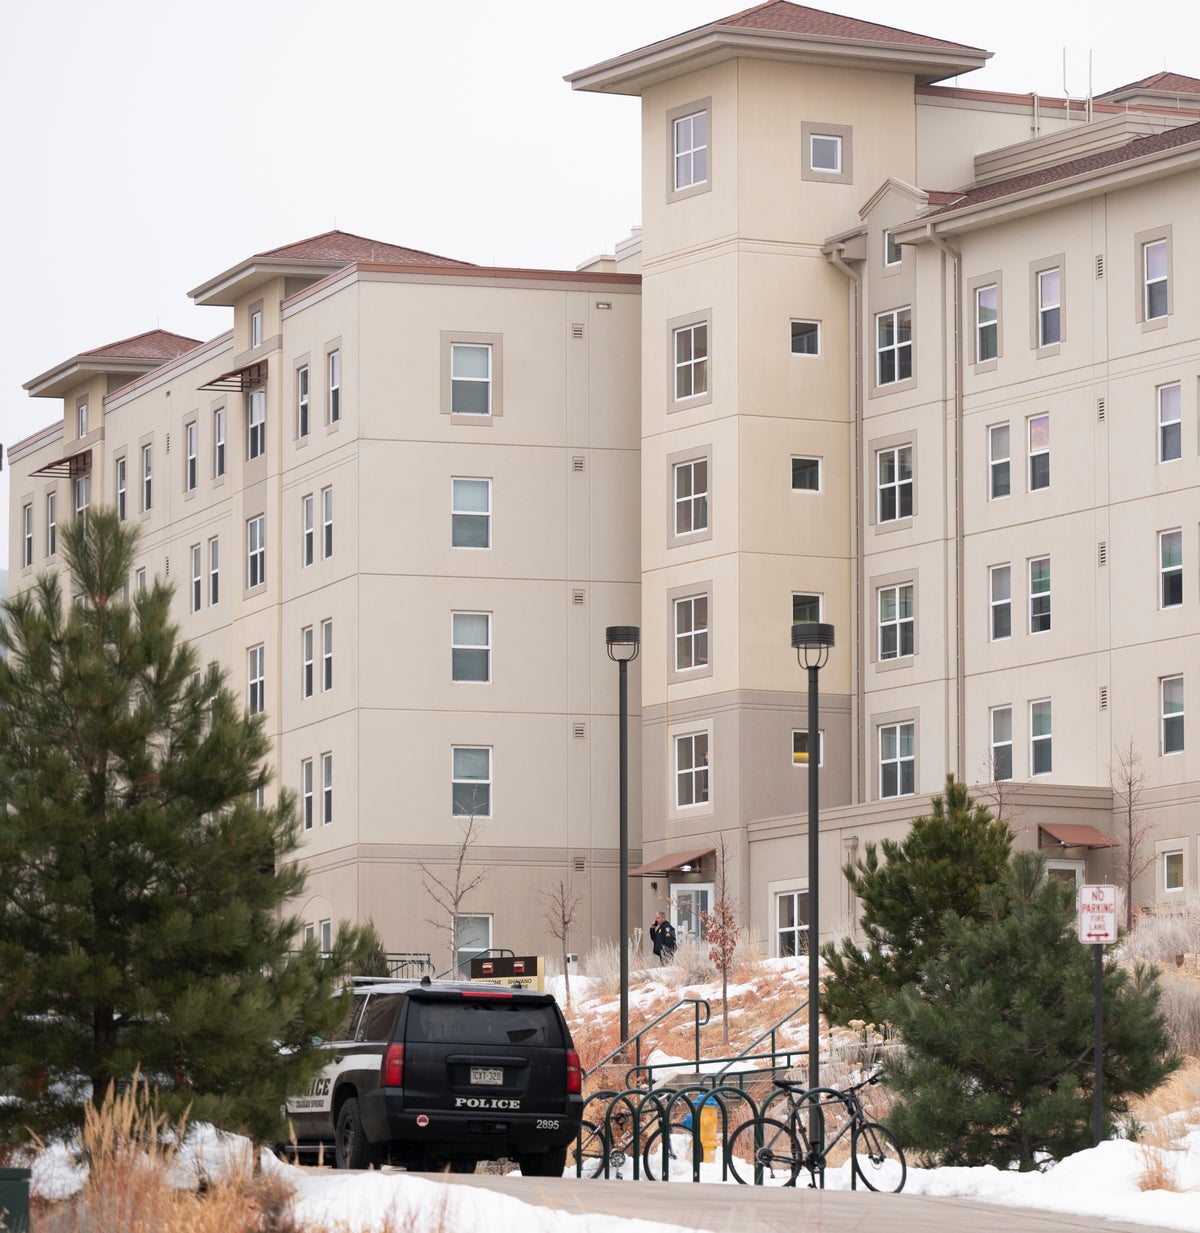 2 found dead after shooting in Colorado college dorm locks down campus